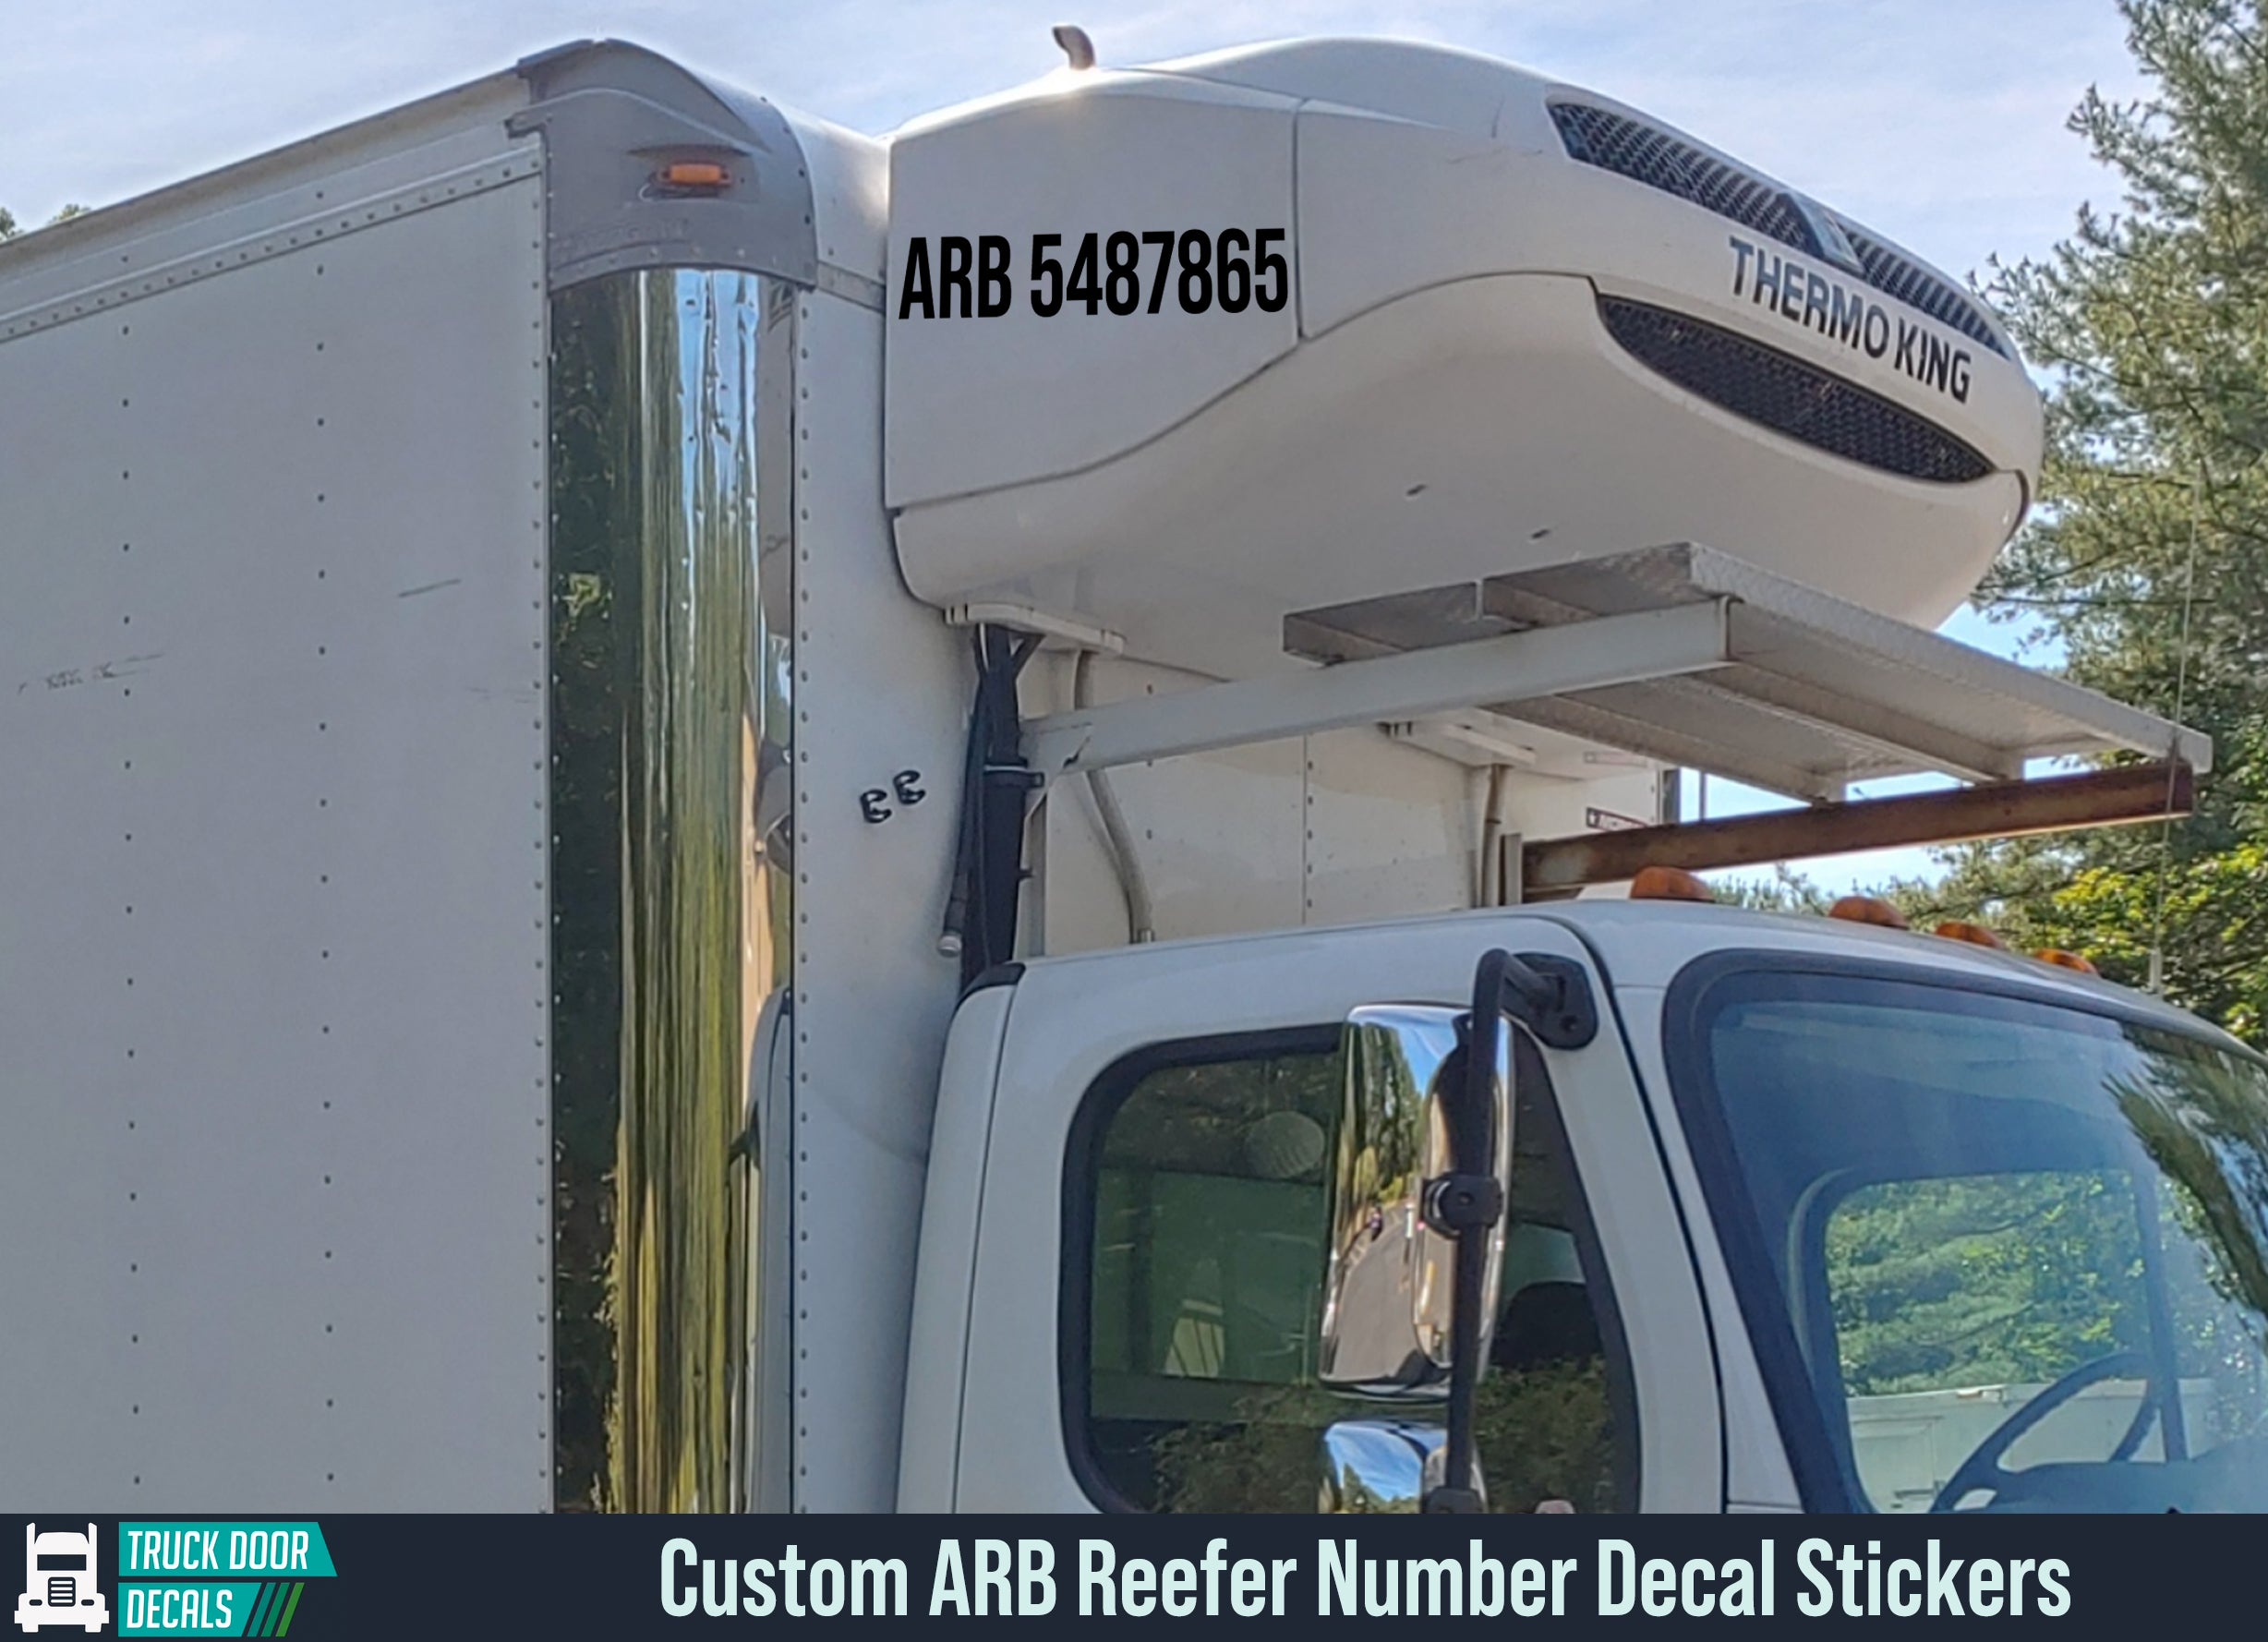 arb number on reefer trailer decal